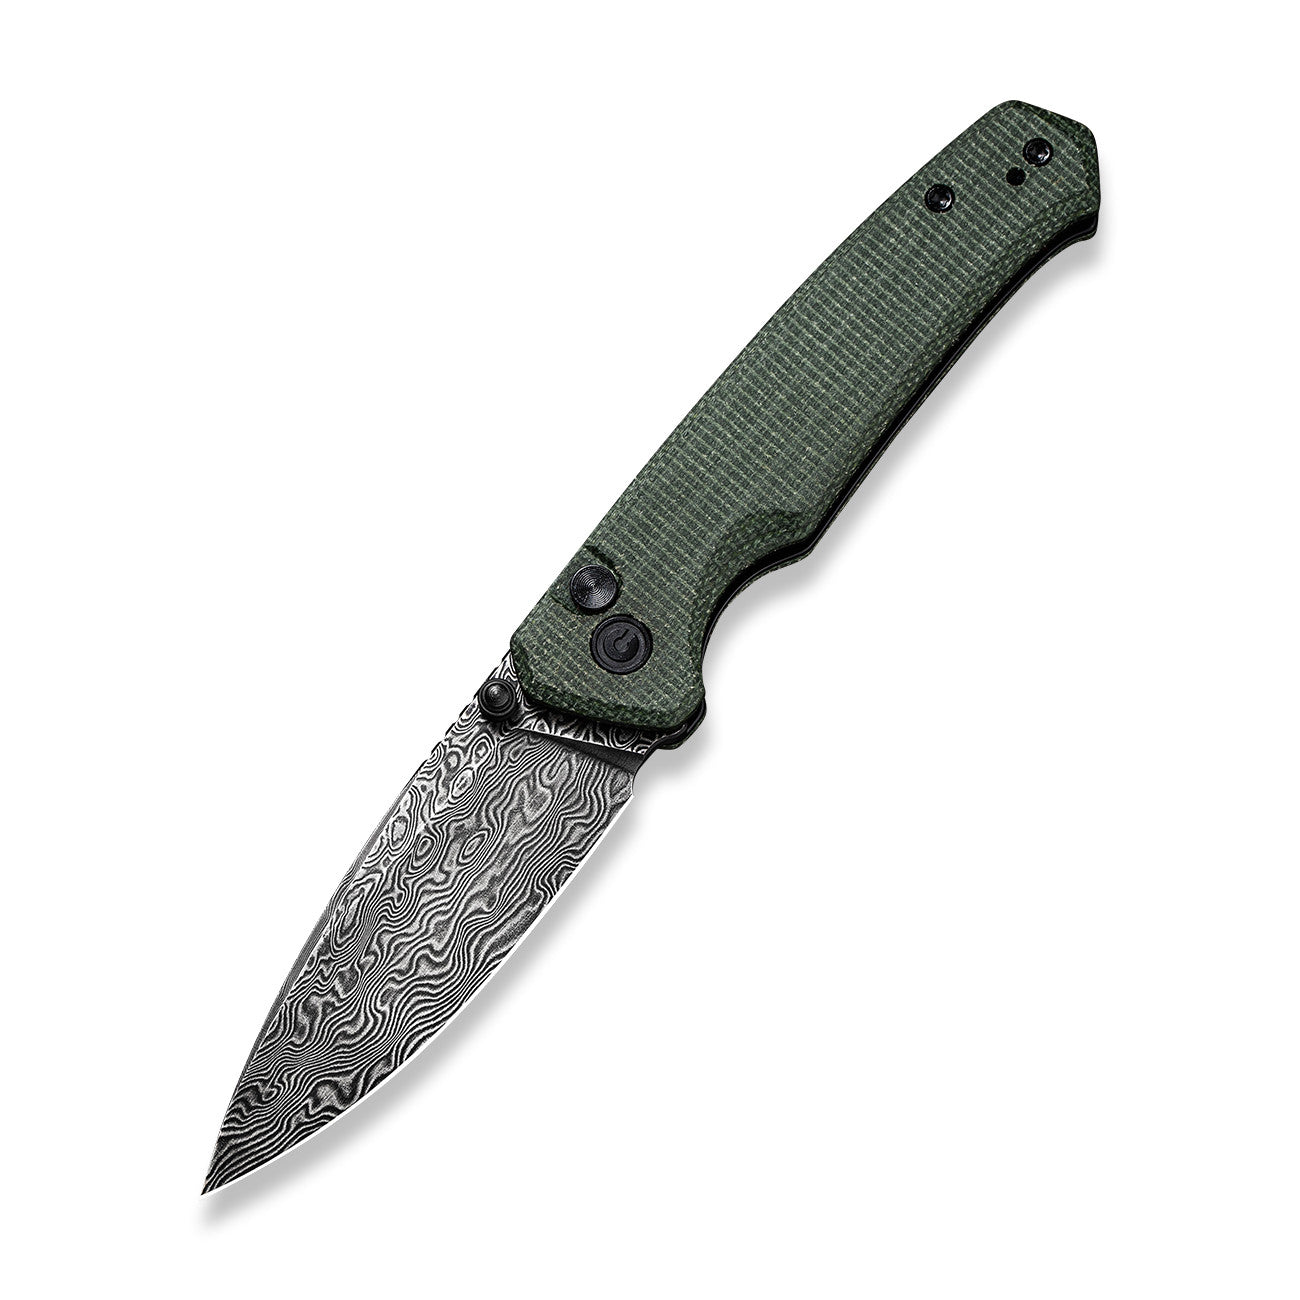 CIVIVI Altus EDC Knife - Micarta Handle Damascus Blade